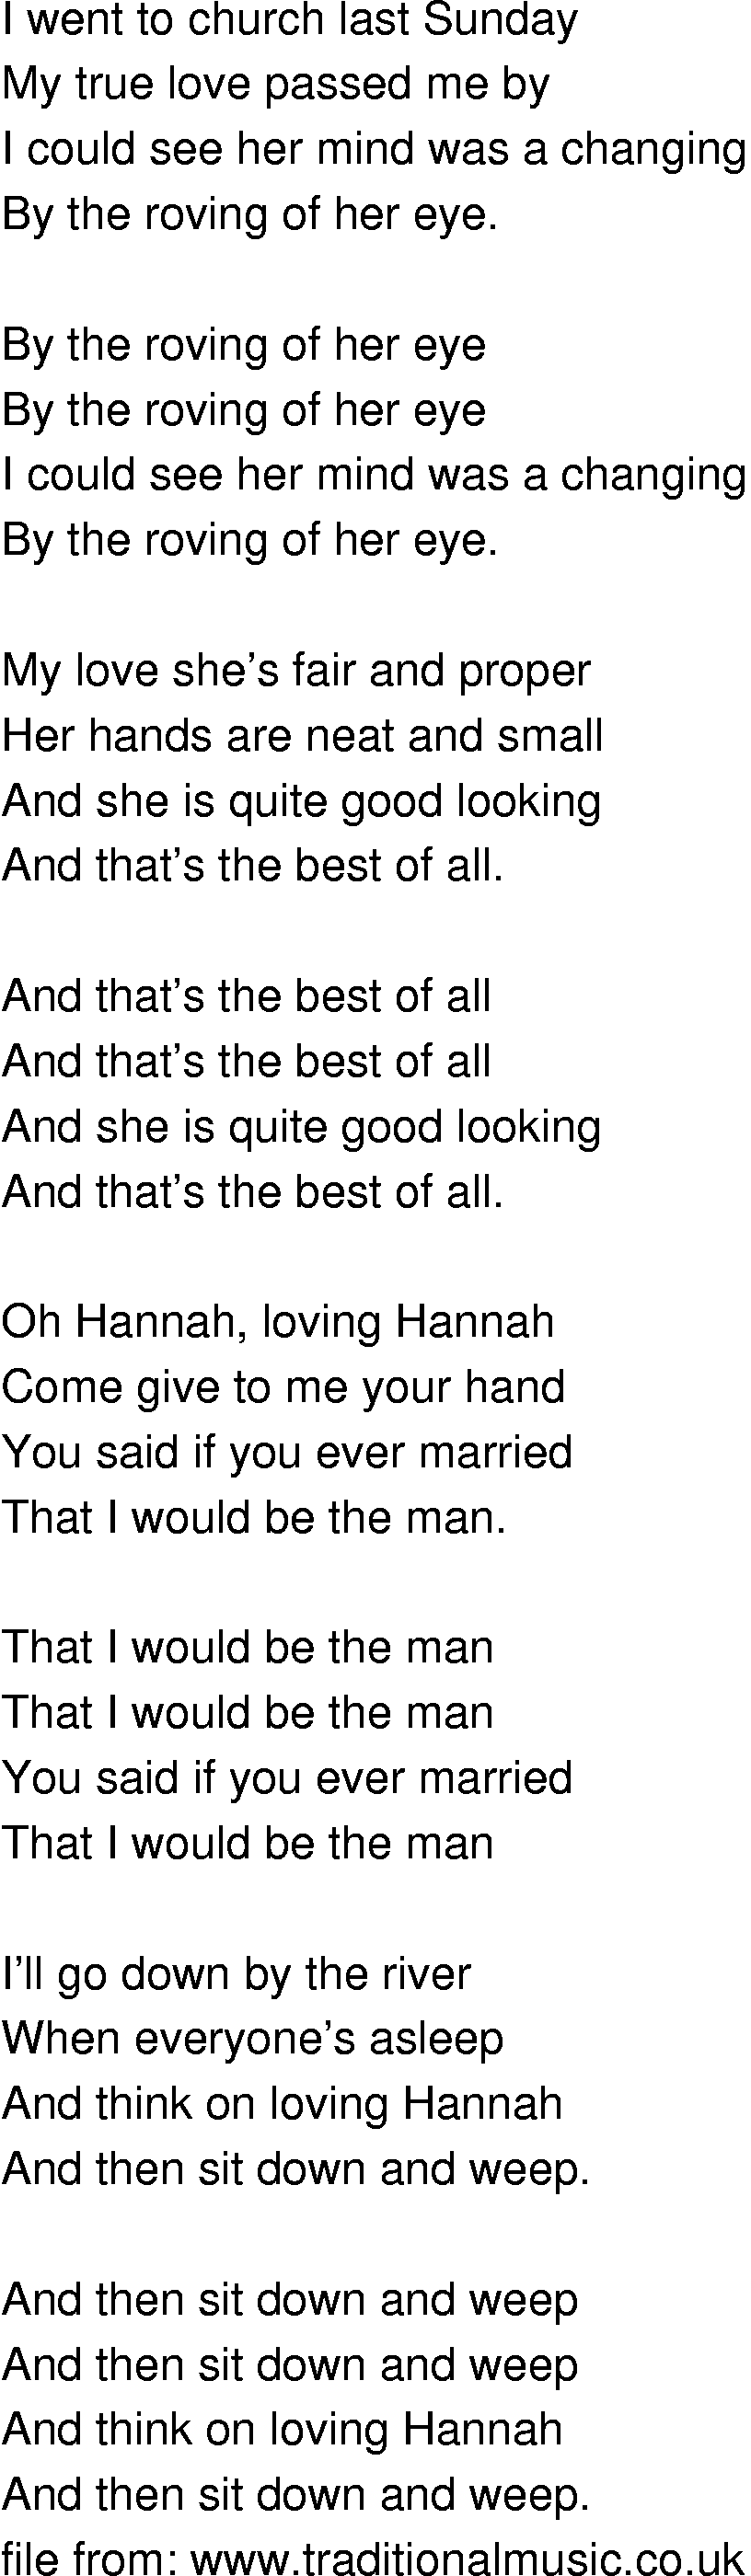 Old-Time (oldtimey) Song Lyrics - loving hannah